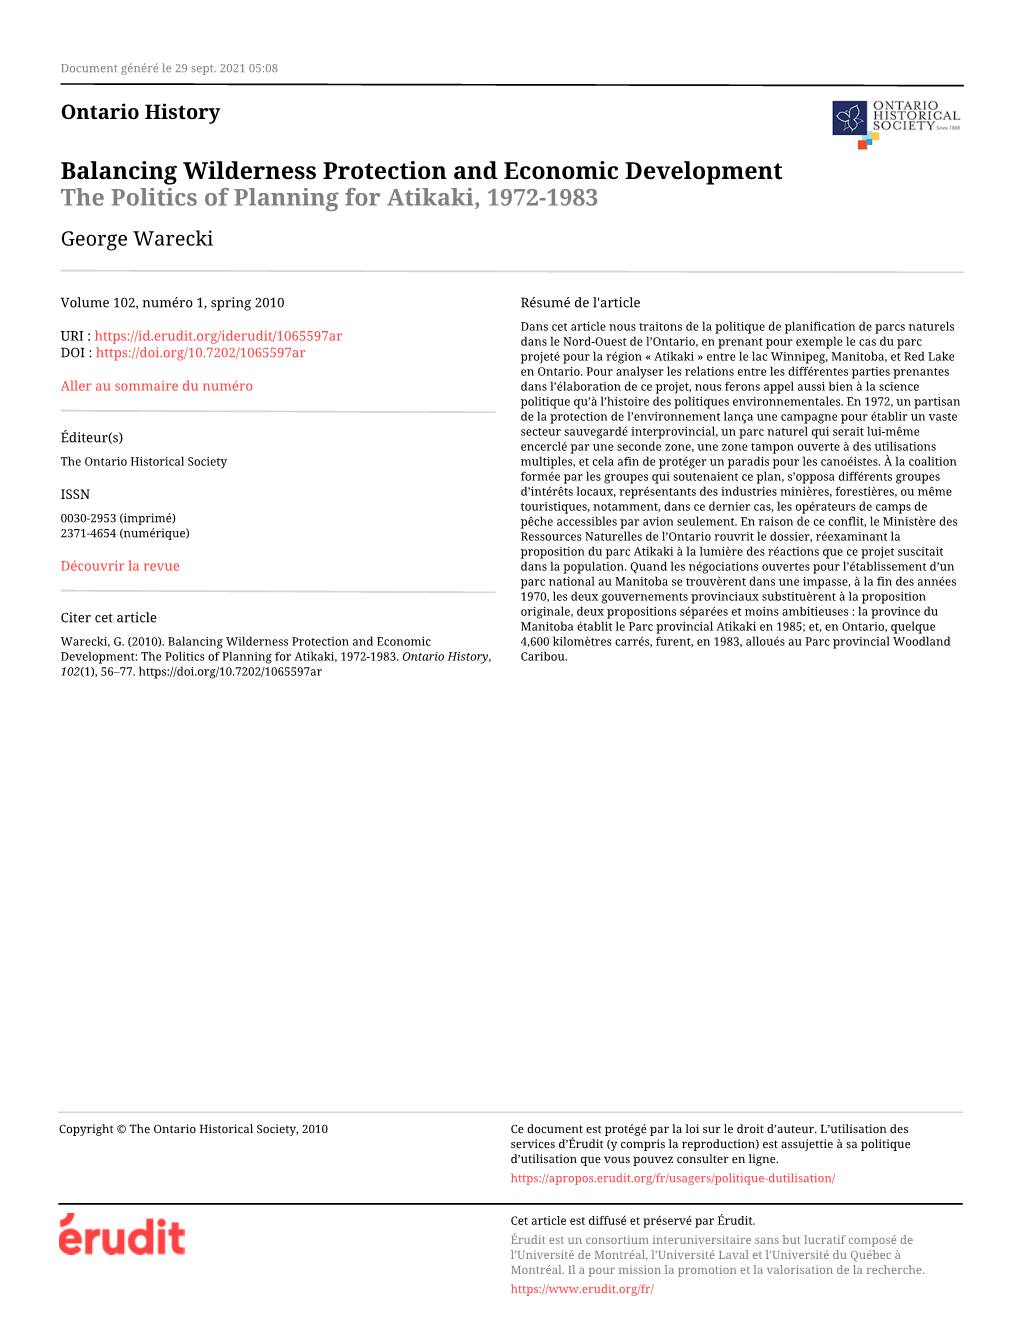 Balancing Wilderness Protection and Economic Development: the Politics of Planning for Atikaki, 1972-1983